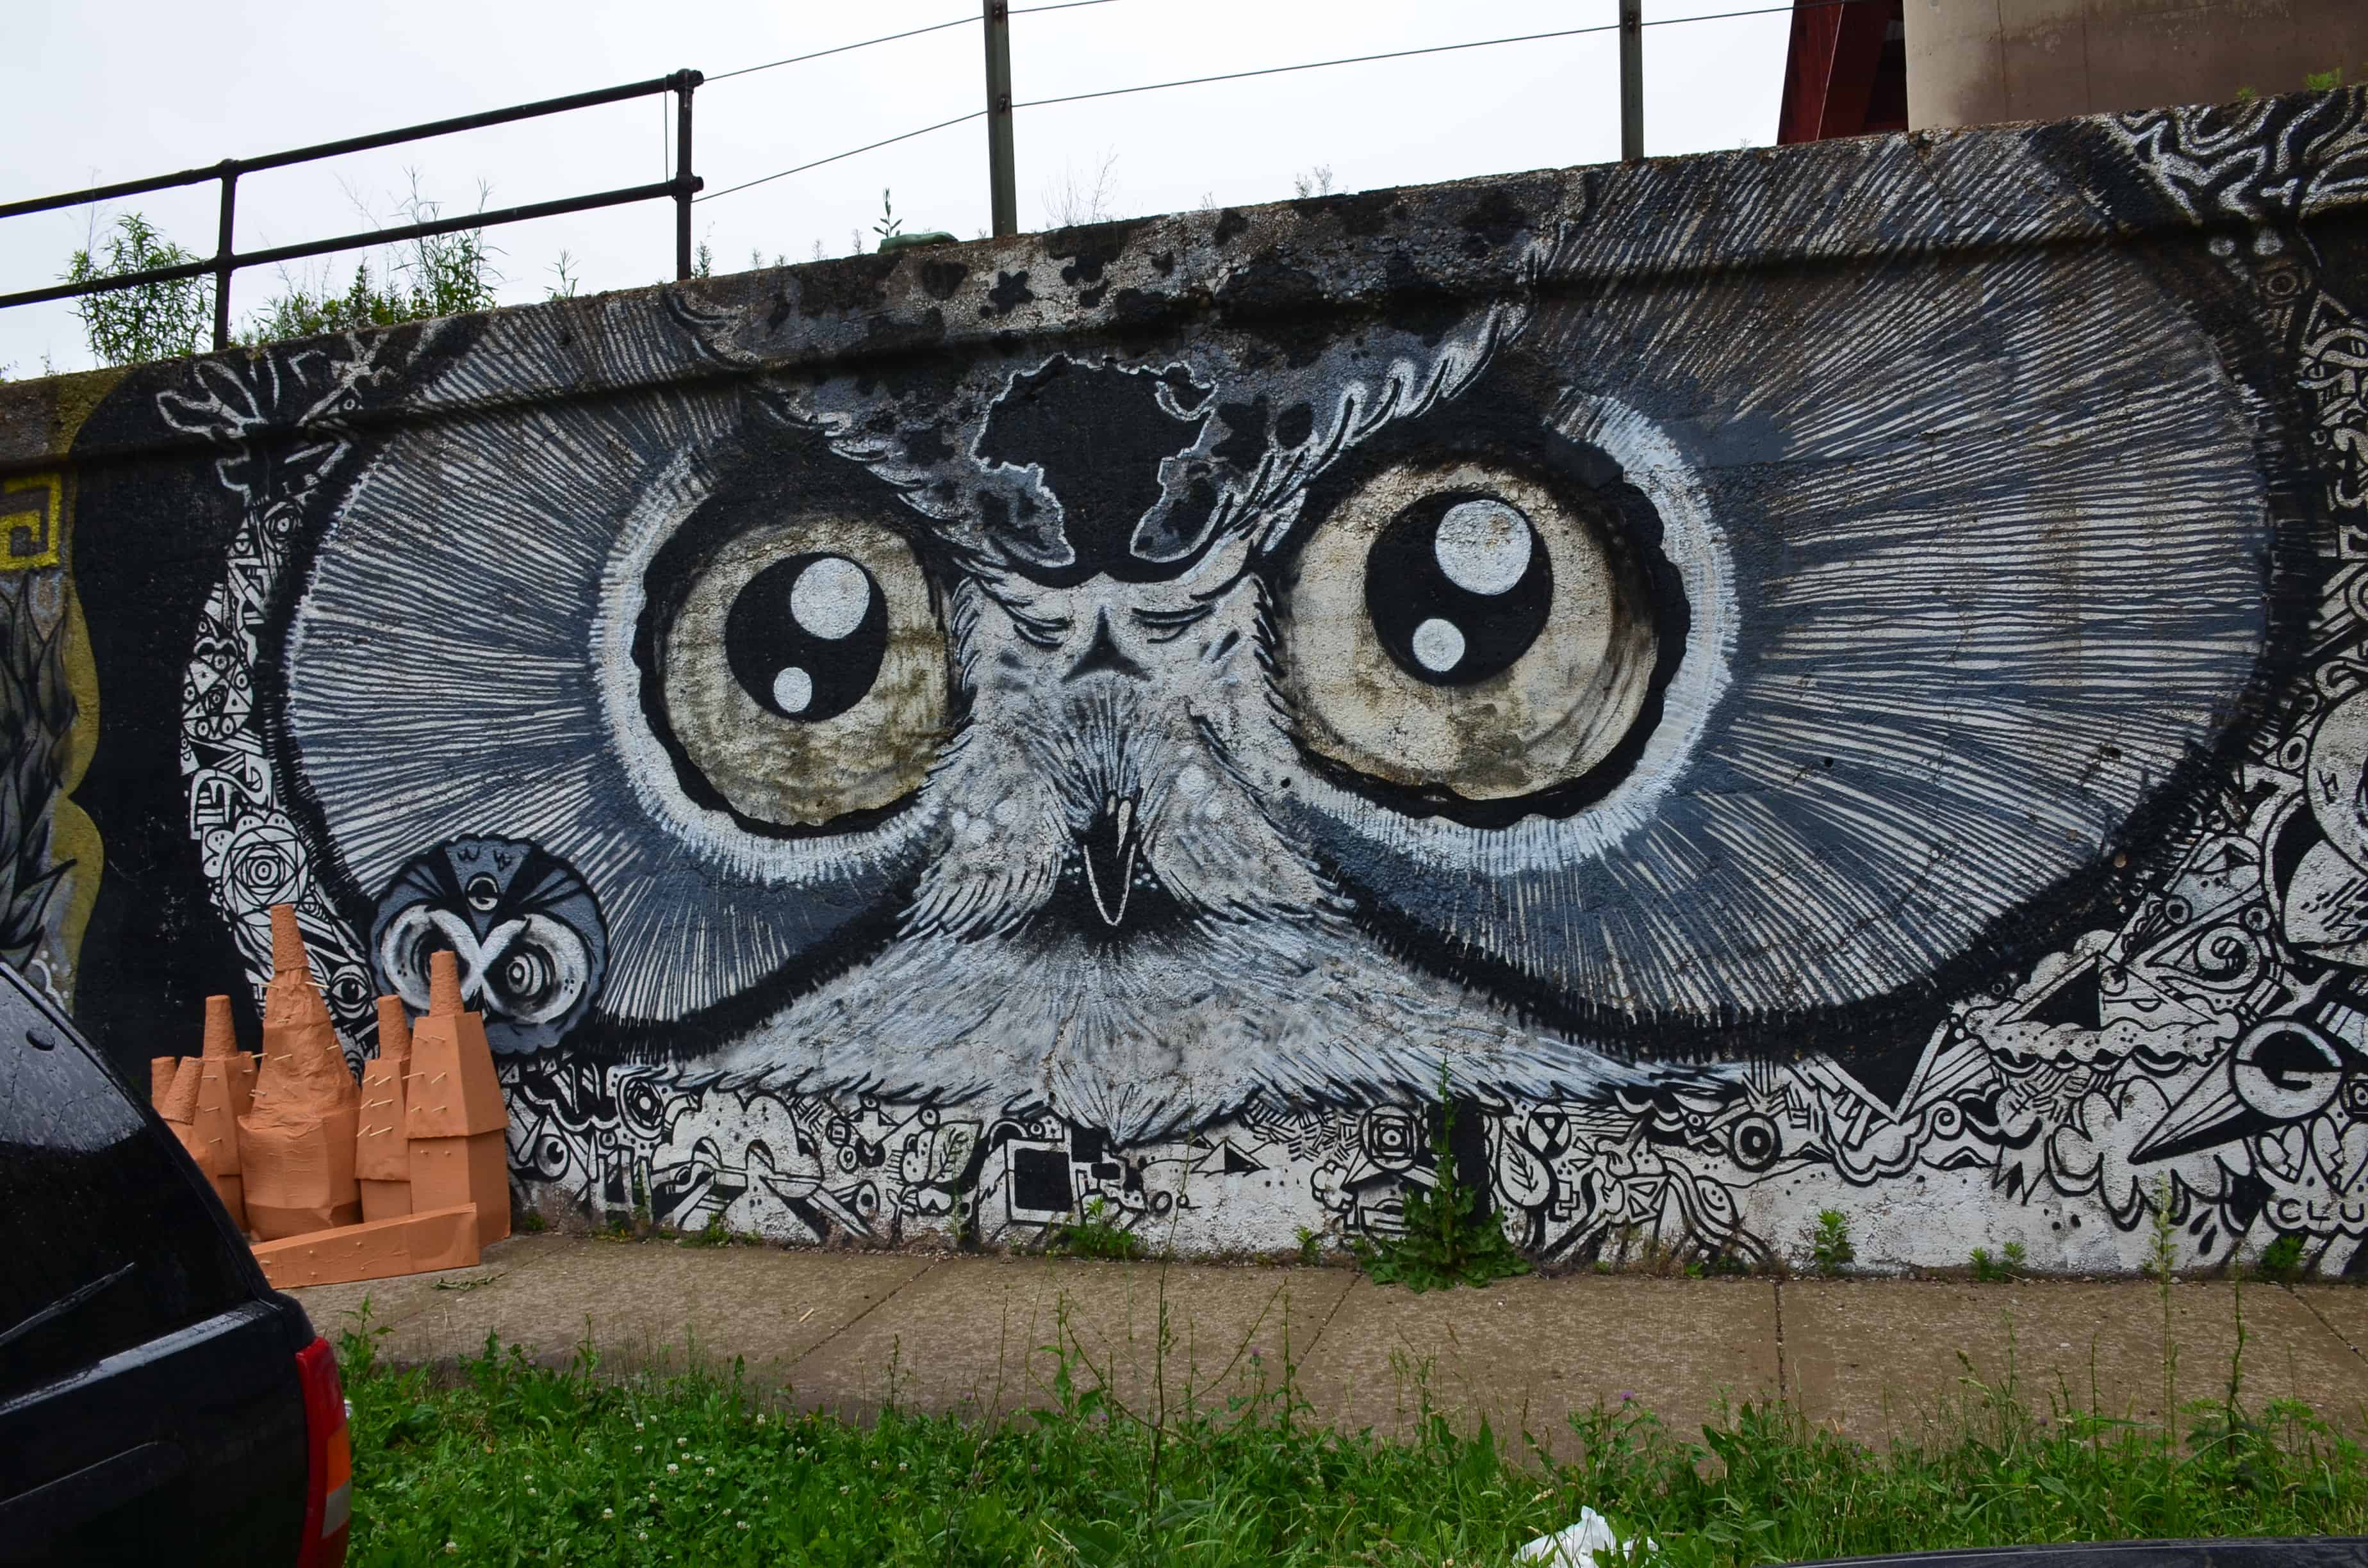 Owl mural between Paulina and Wood in Pilsen, Chicago, Illinois